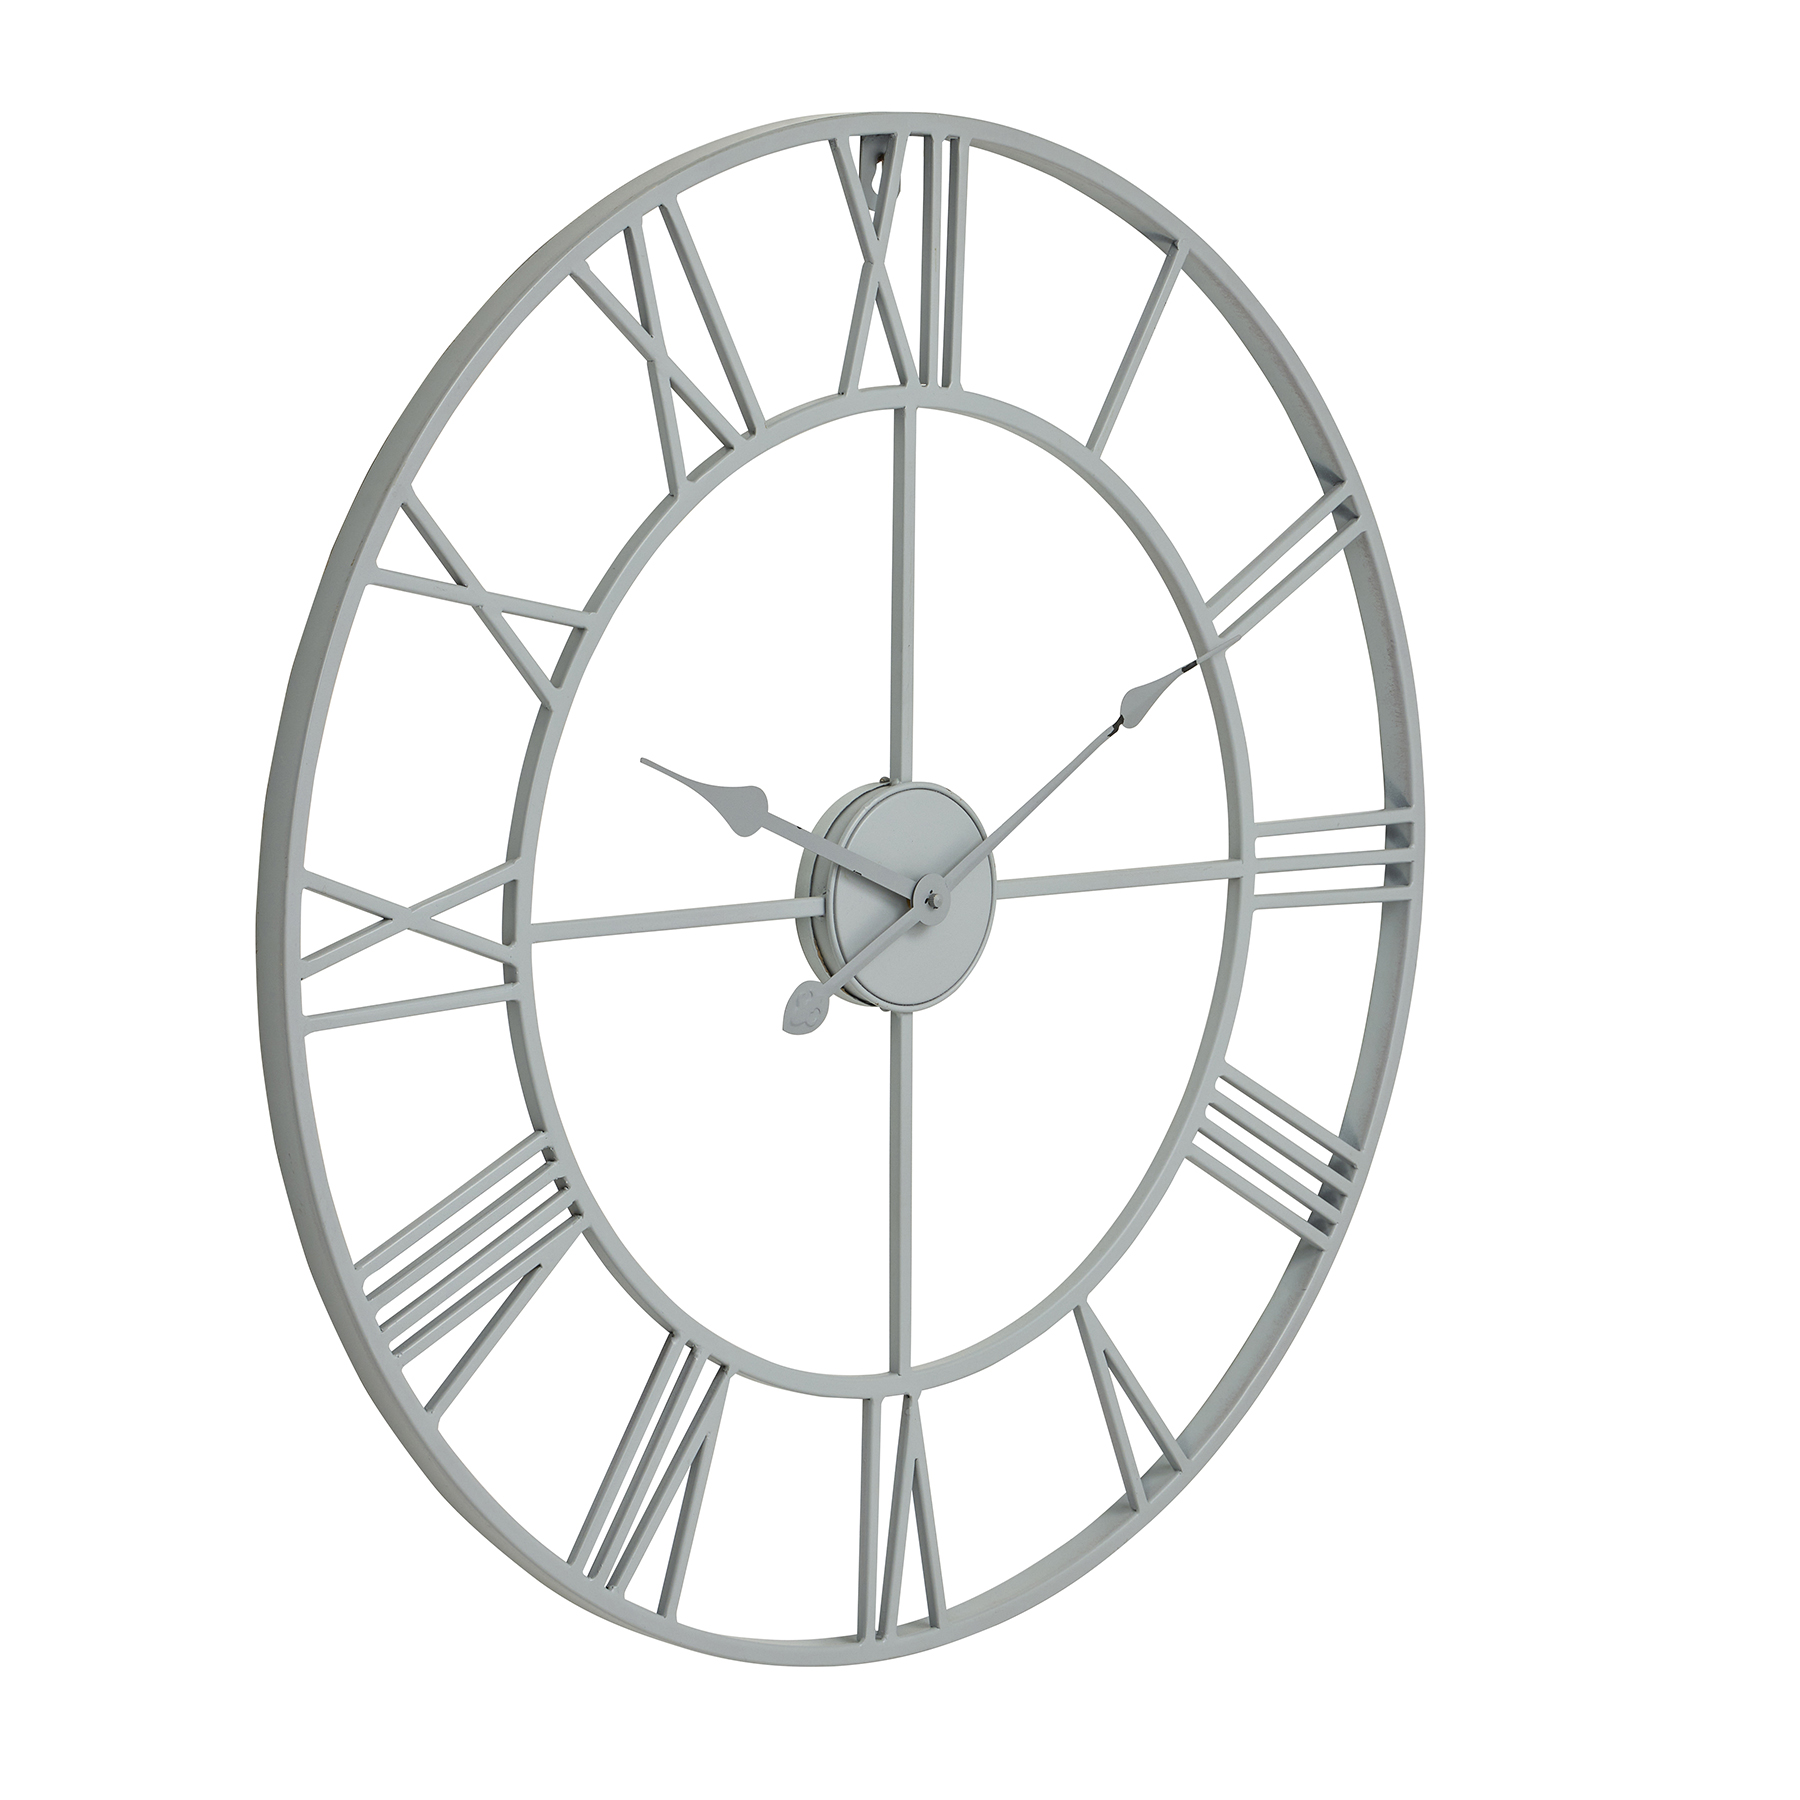 Grey Skeleton Wall Clock - Image 1